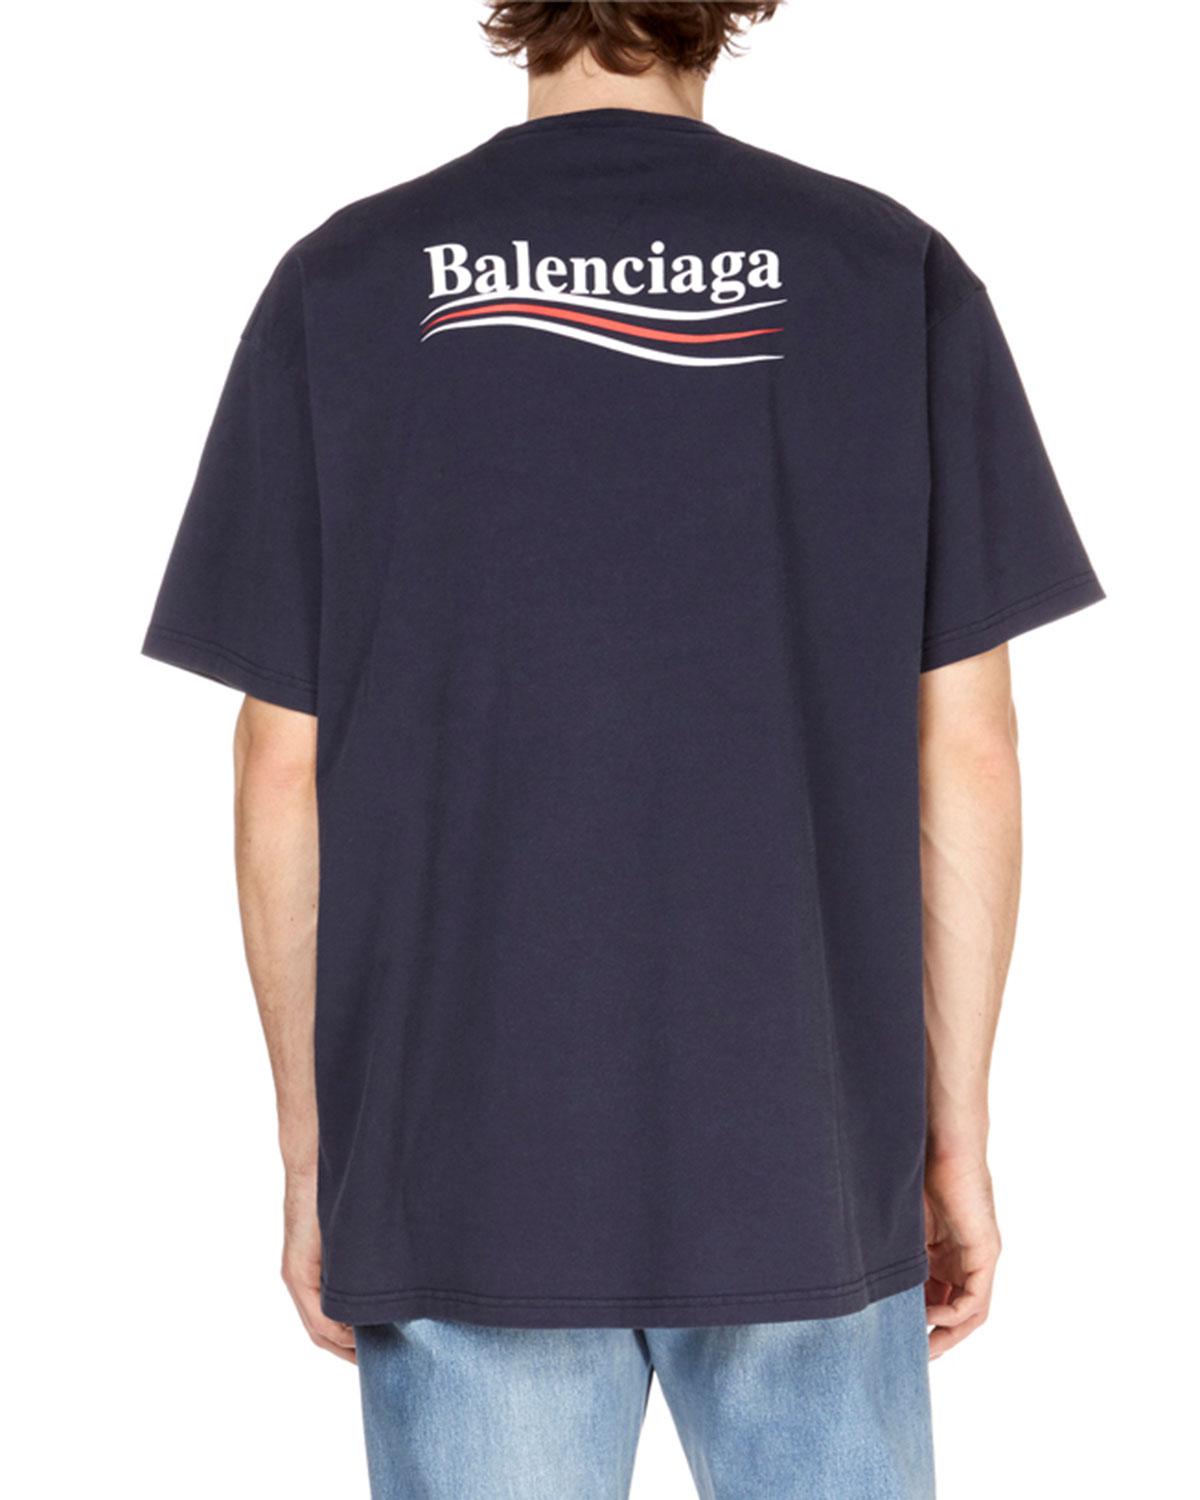 balenciaga campaign logo t-shirt - 59% remise - www.muminlerotomotiv.com.tr